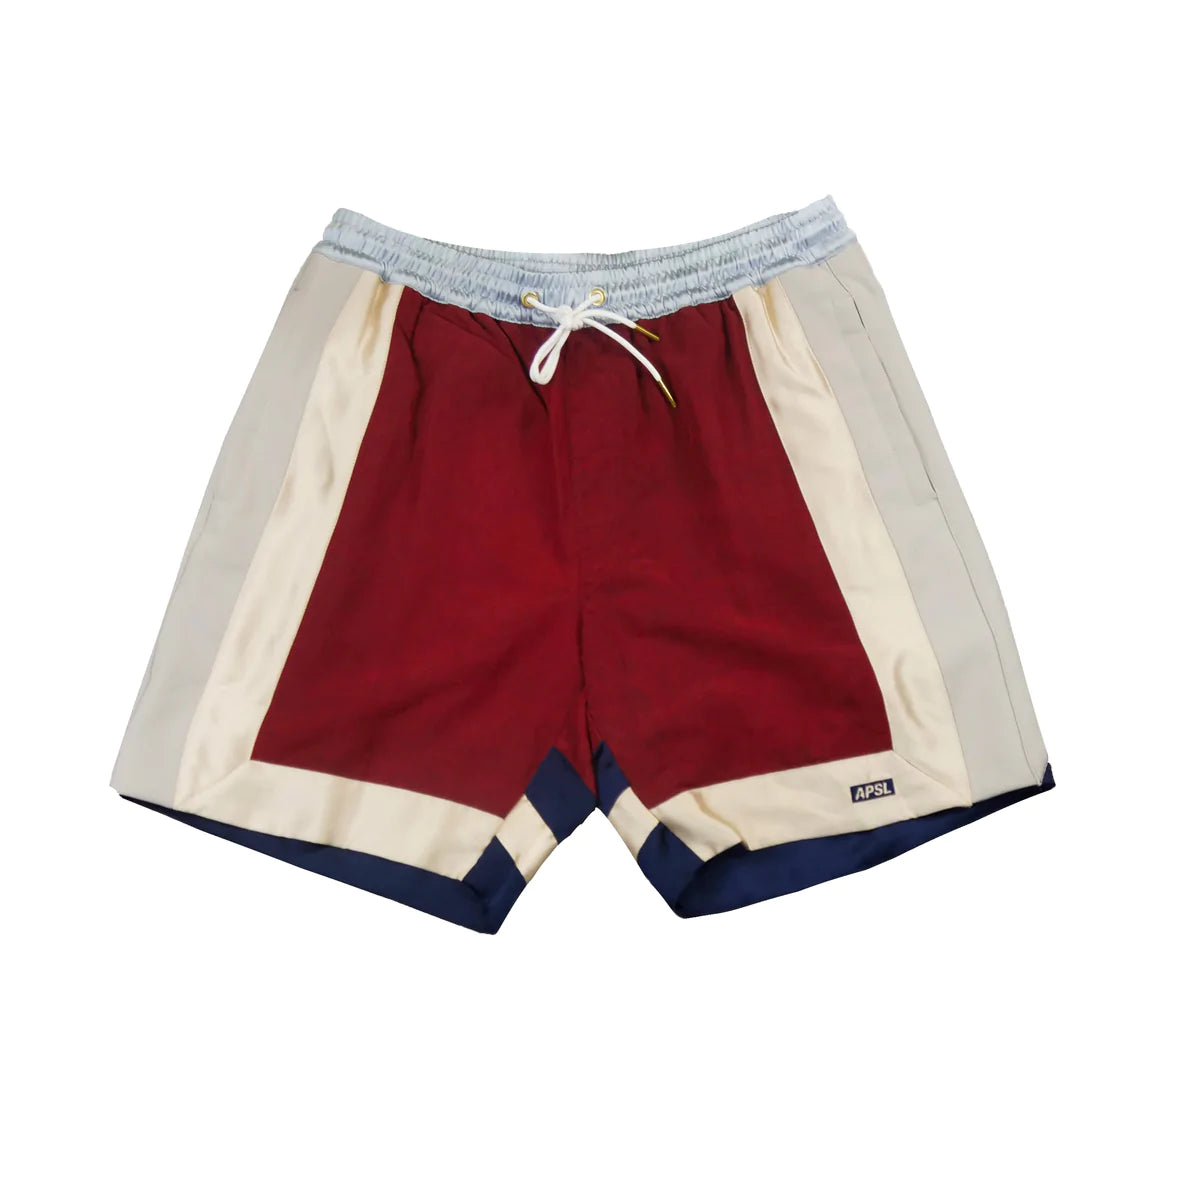 alphastyle gerald silk shorts - 8586 red